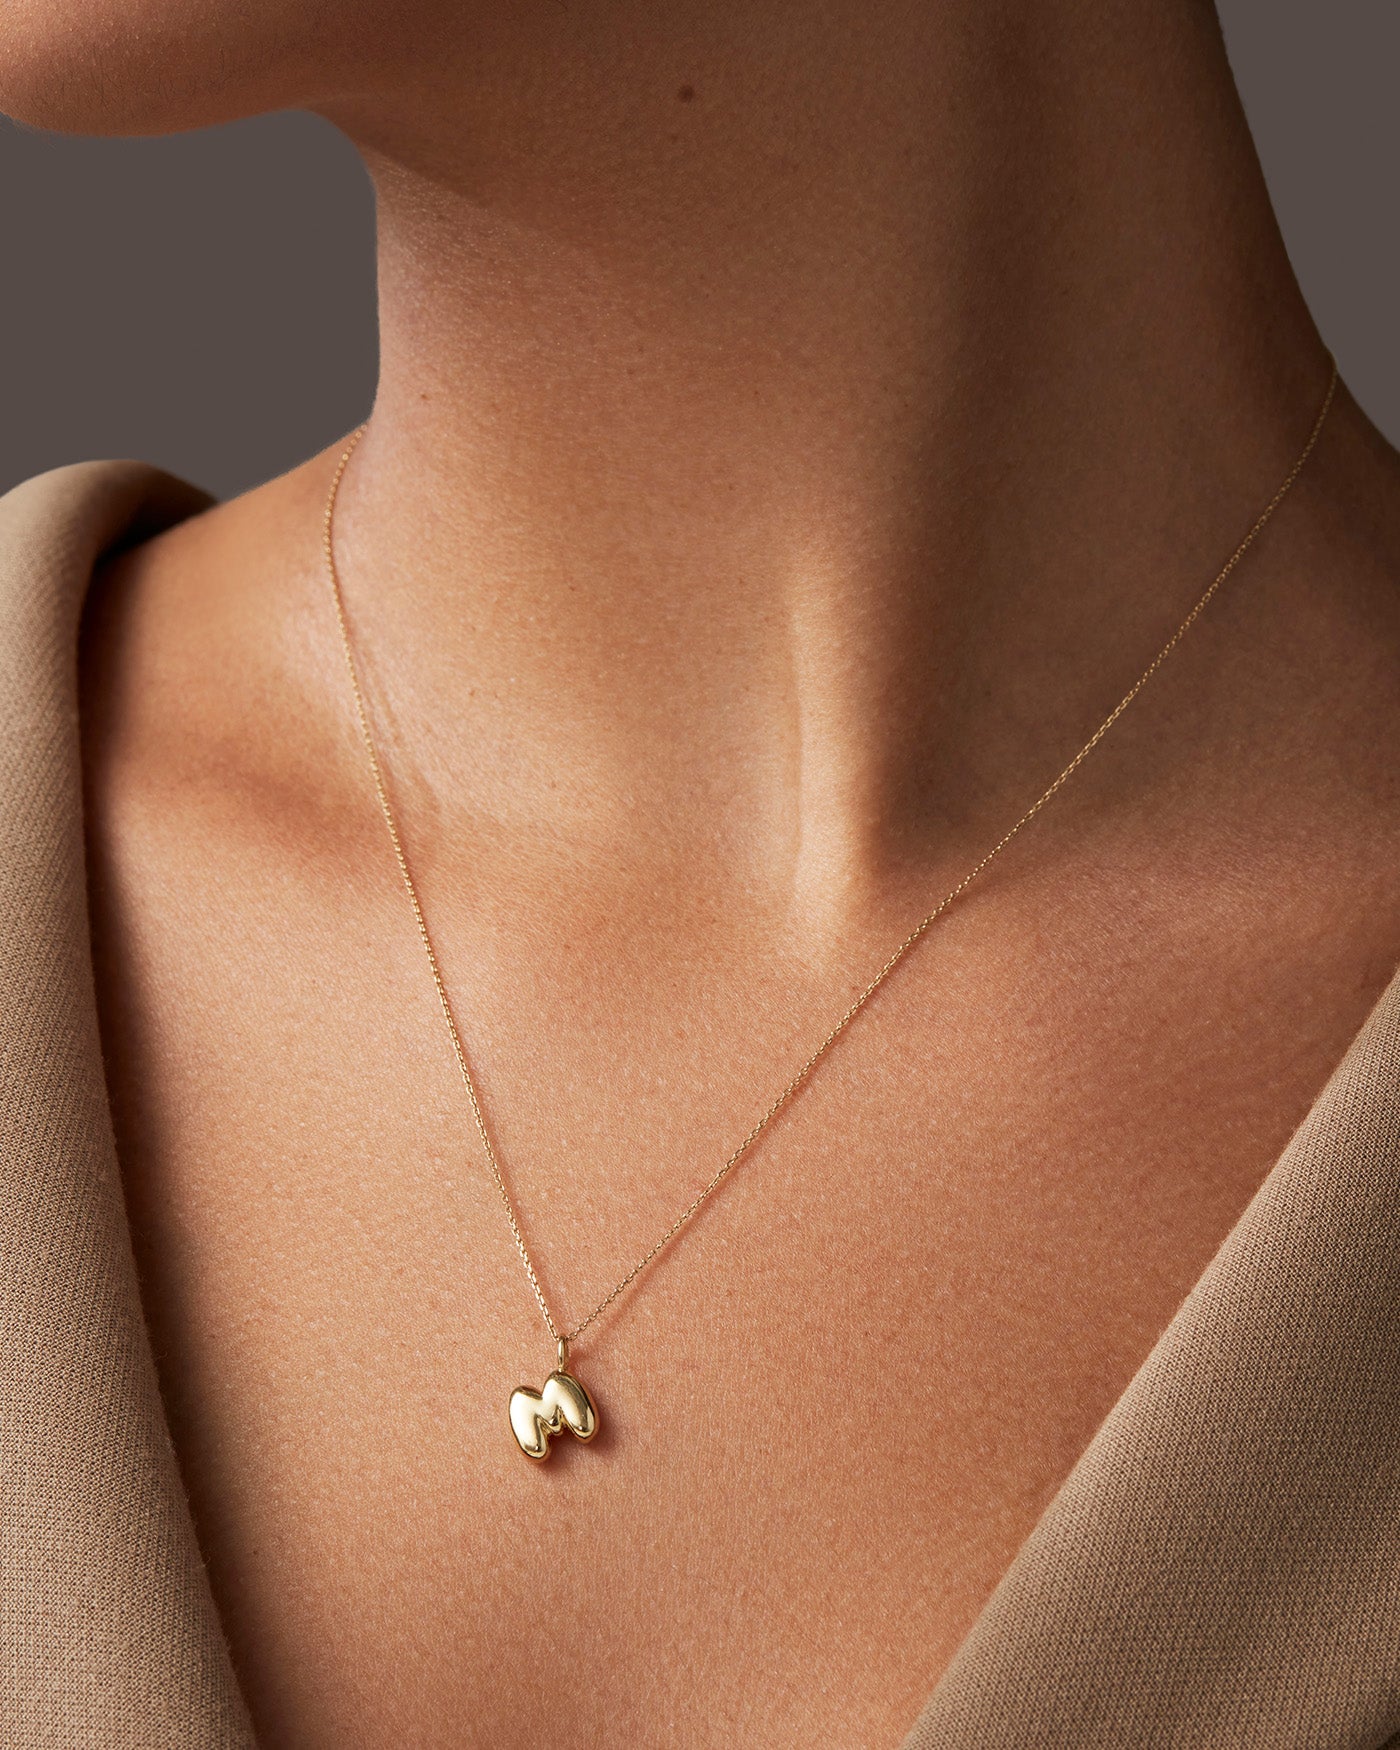 Bubble Heart Necklace Gold